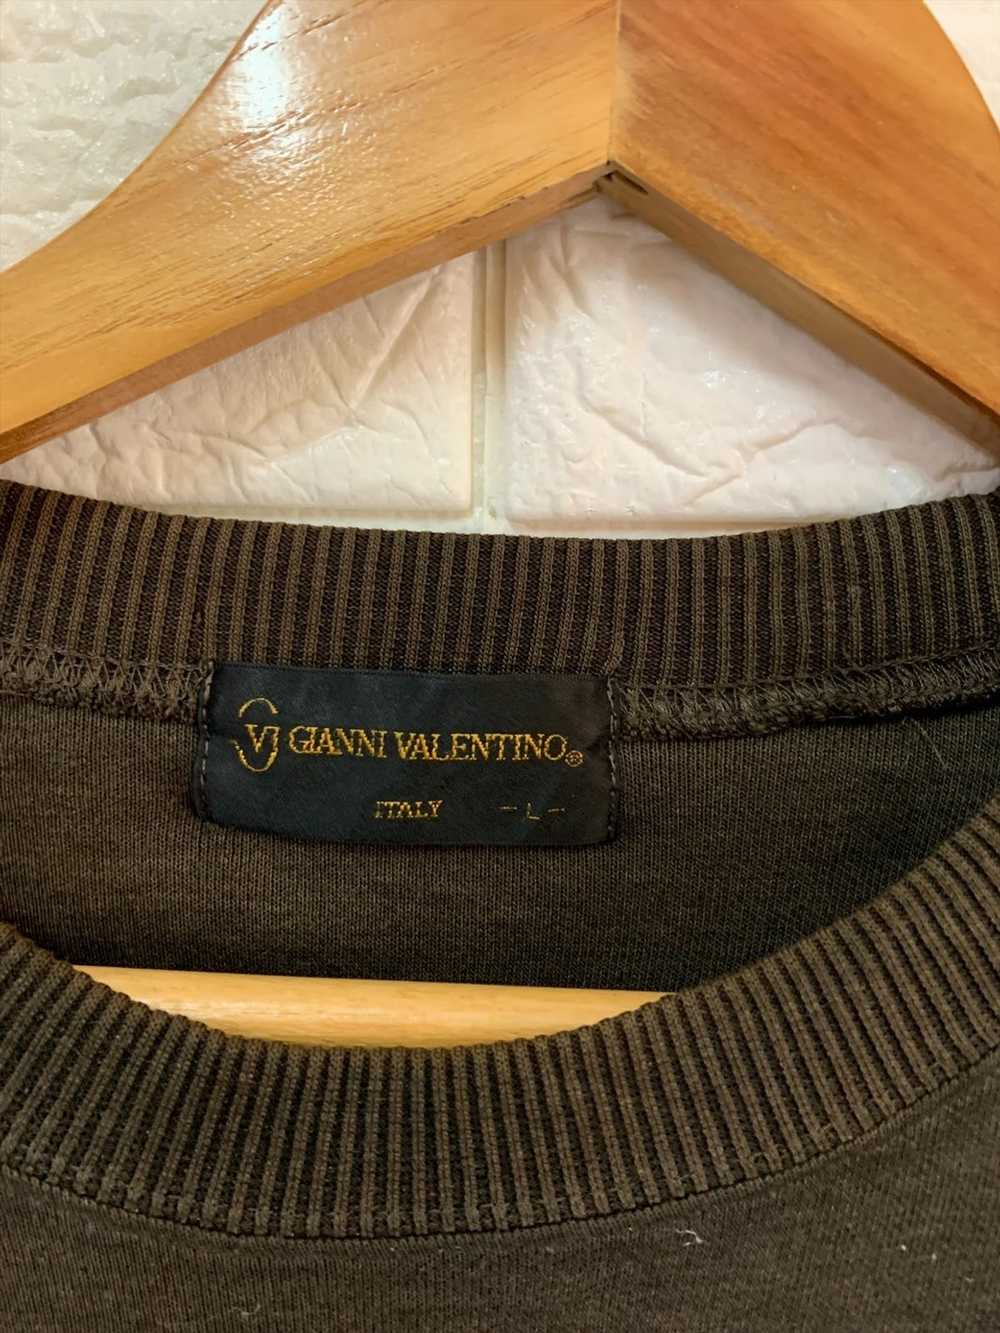 Gianni × Valentino Gianni Valentino sweatshirt - image 4